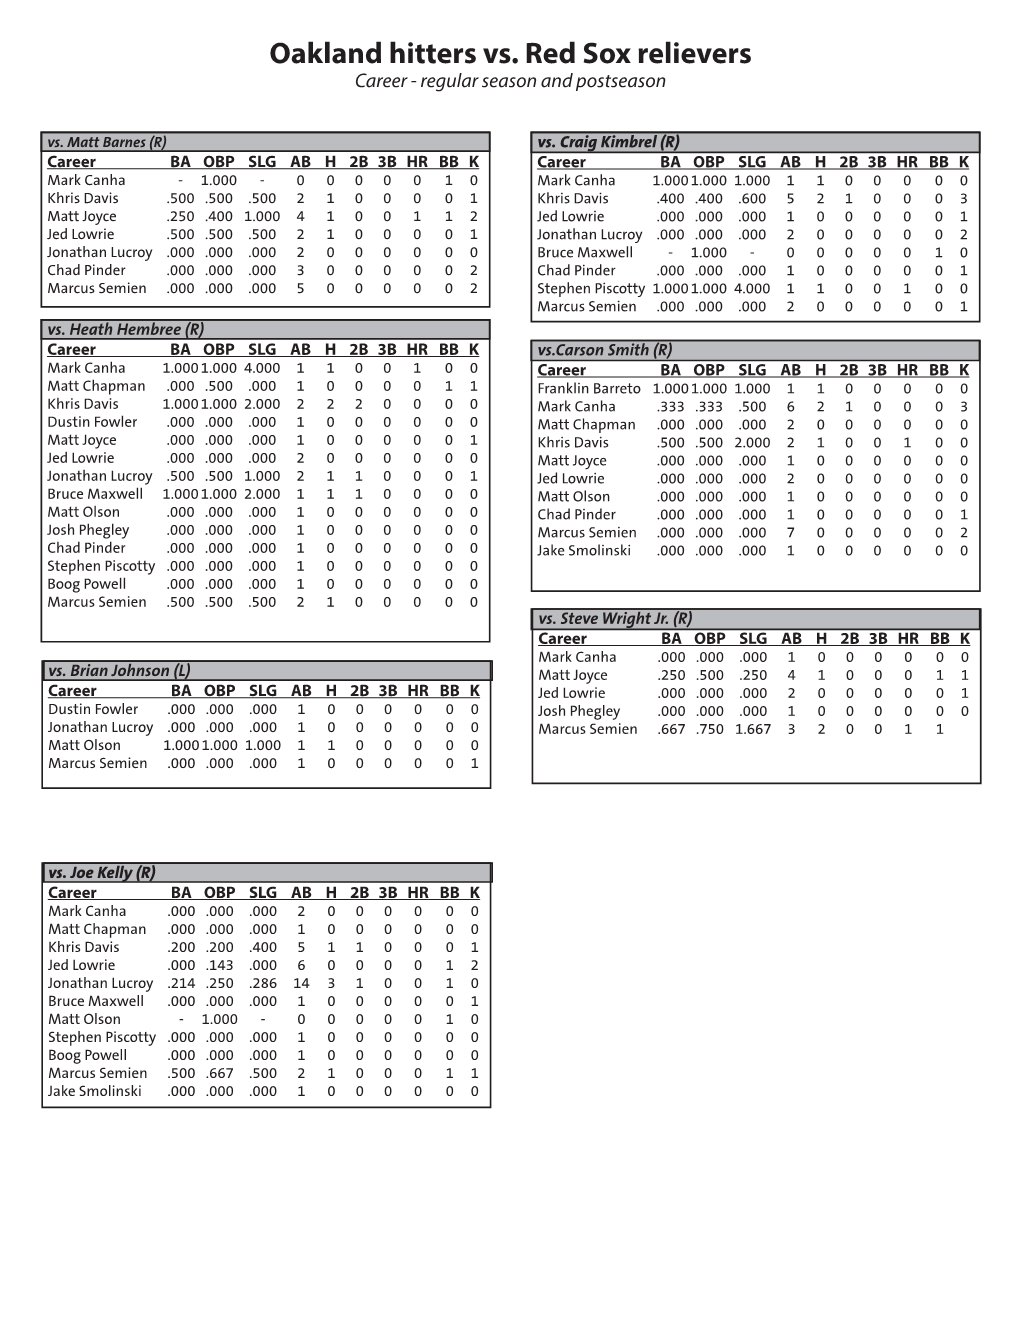 Oakland Hitters Vs. Red Sox Relievers Career - Regular Season and Postseason Vs